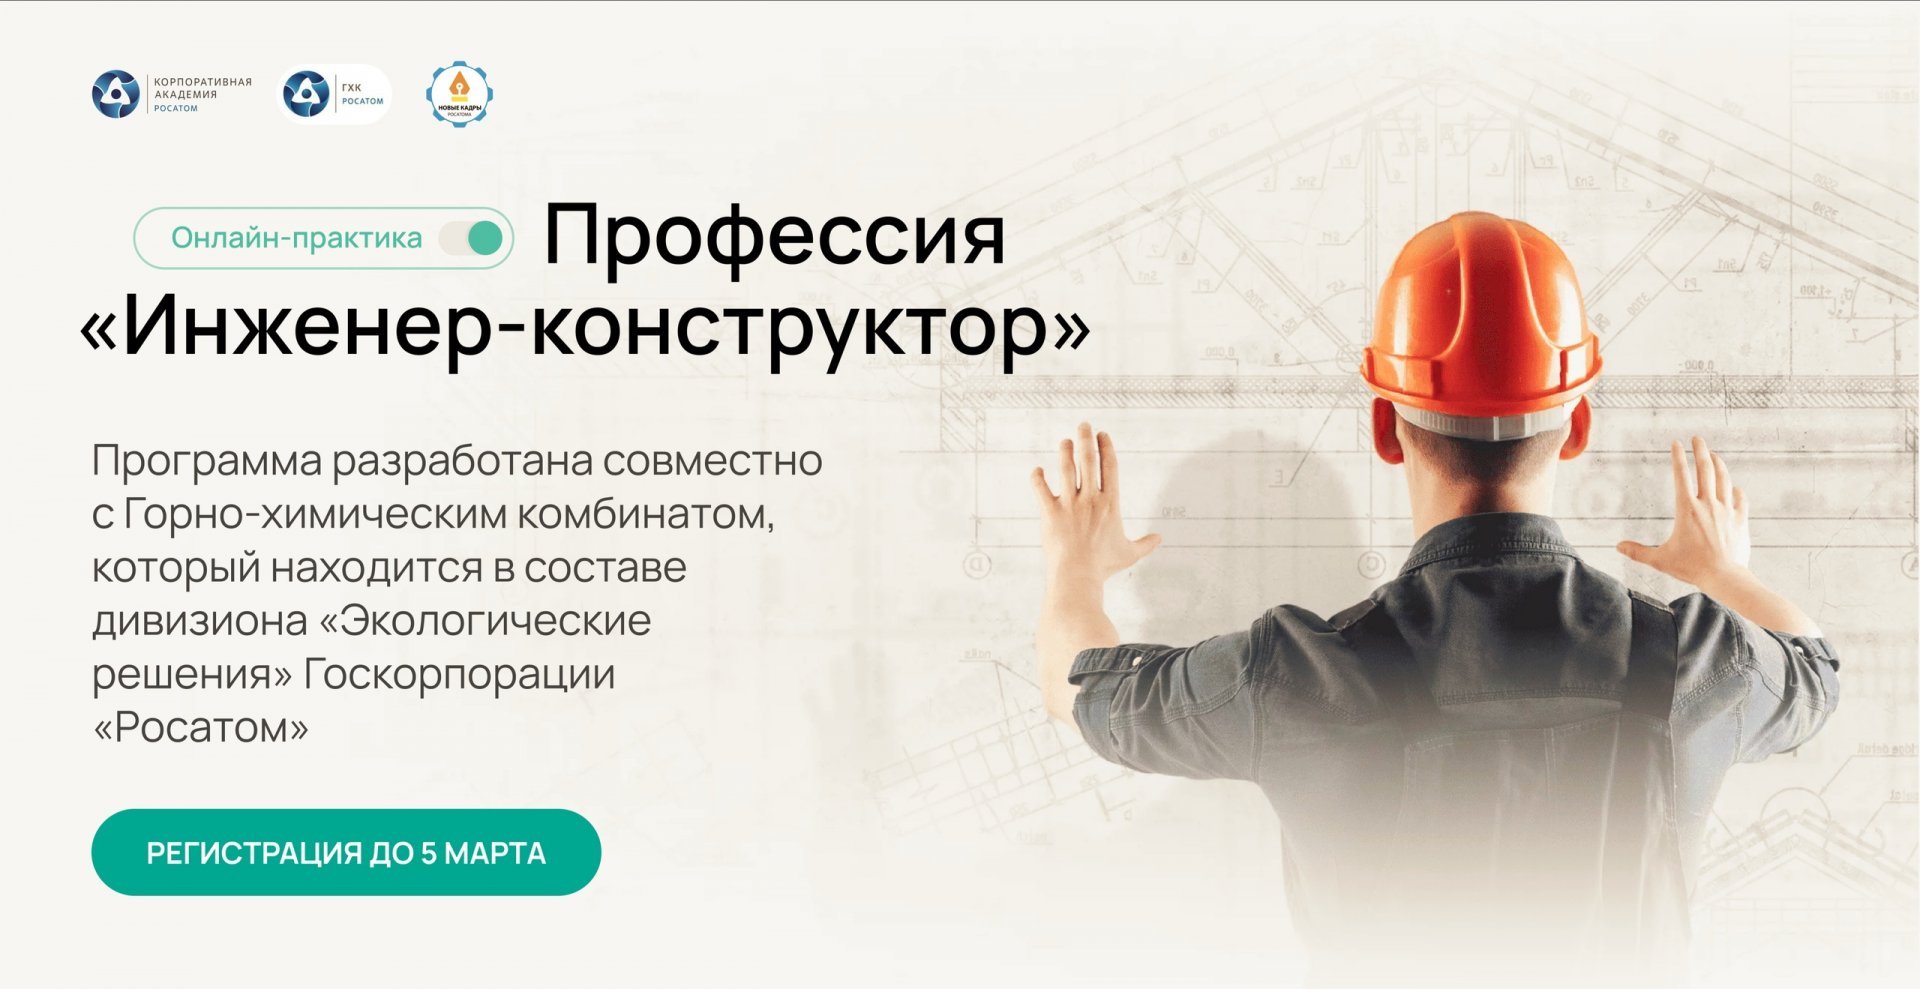 Открыта регистрация на онлайн-практику по профессии: «Инженер-конструктор»